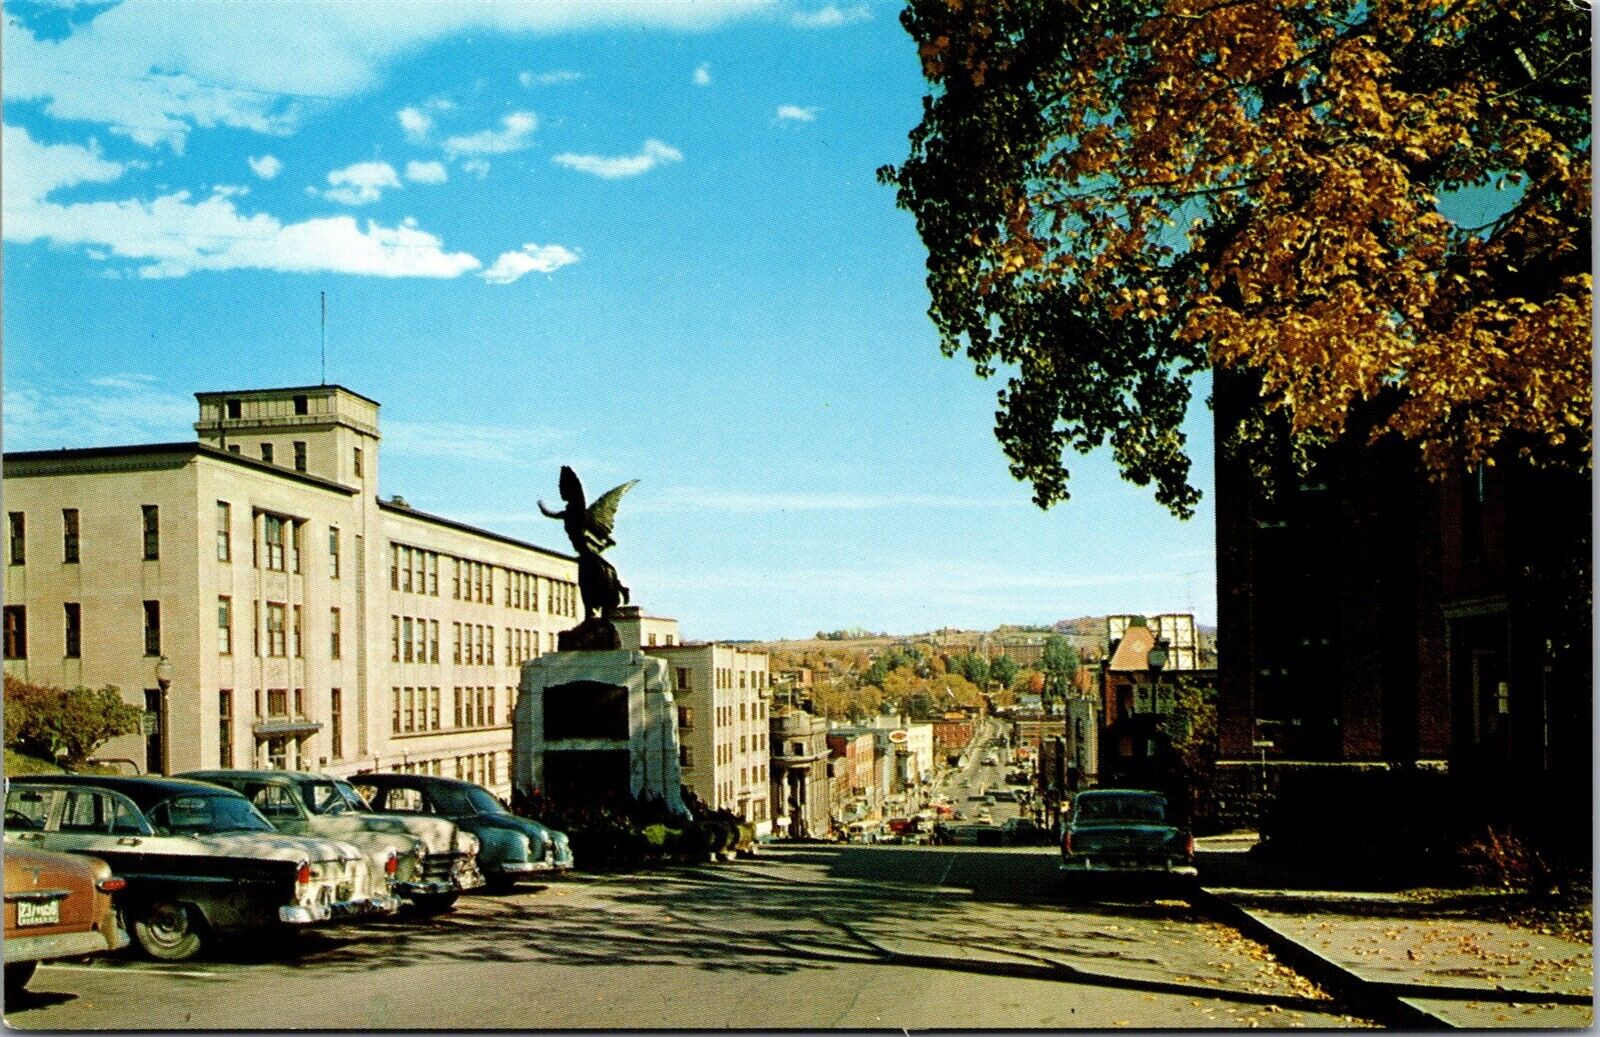 Vtg Sherbrooke Quebec Canada King Street West Statue Old Car 1950s View Postcard